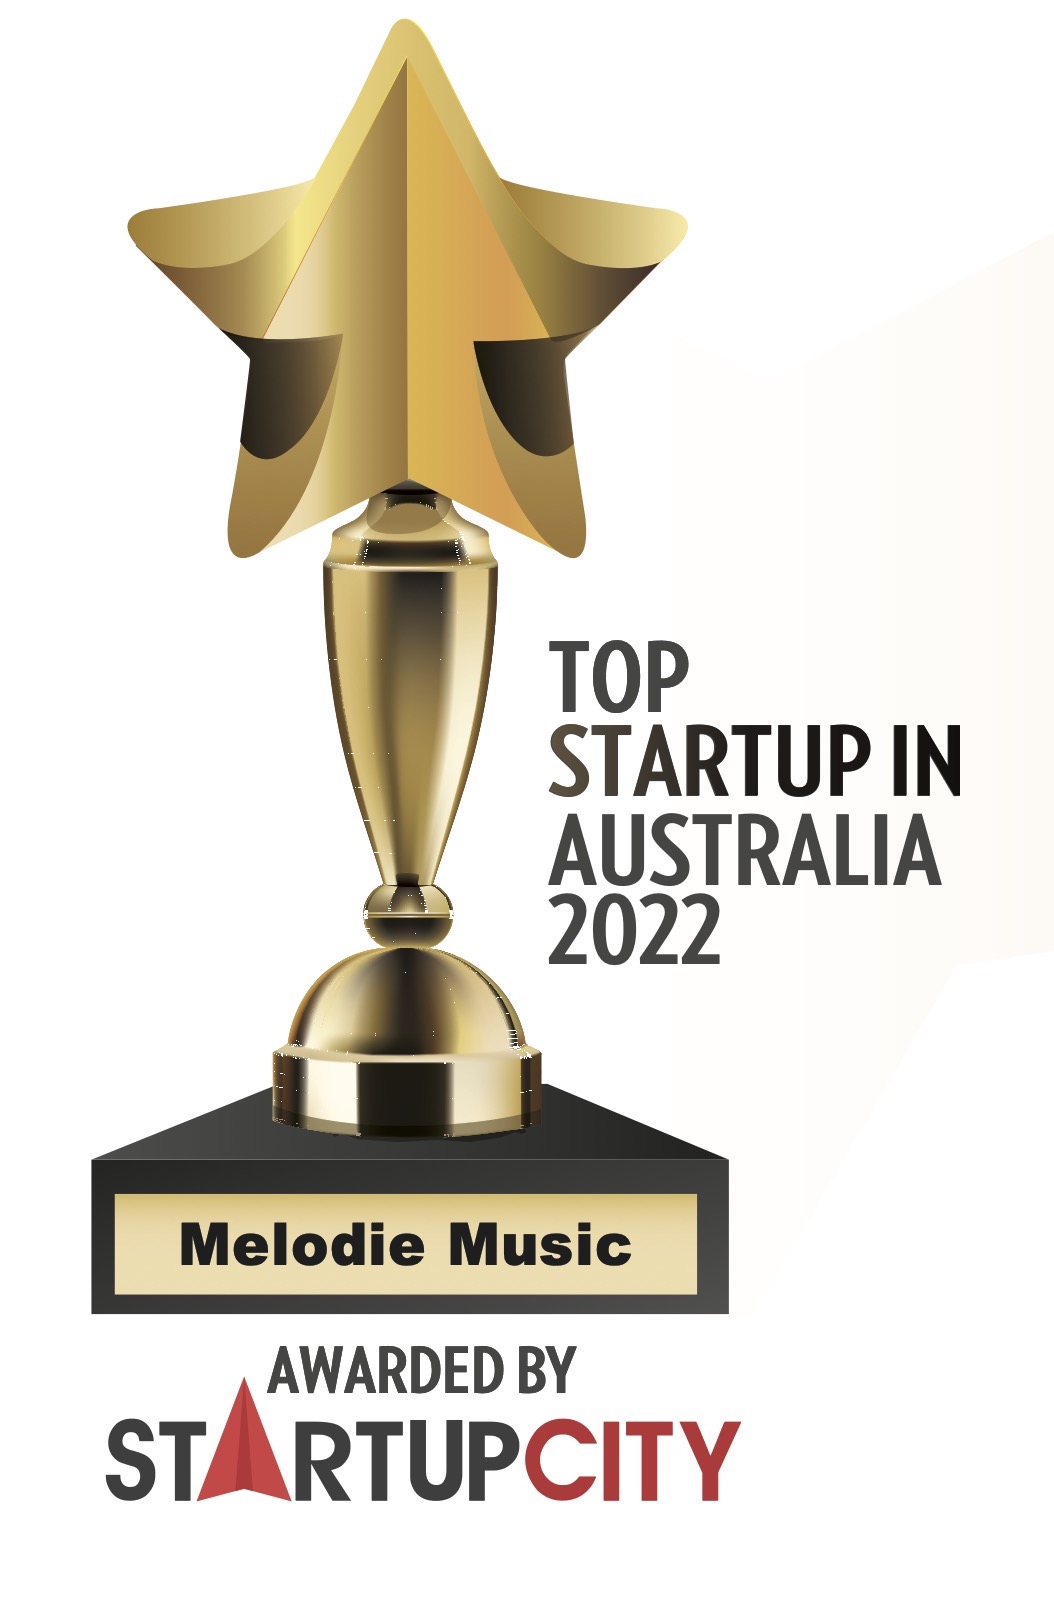 Melodie Startup City Award Logo - TOP 10 STARTUPS IN AUSTRALIA 2022